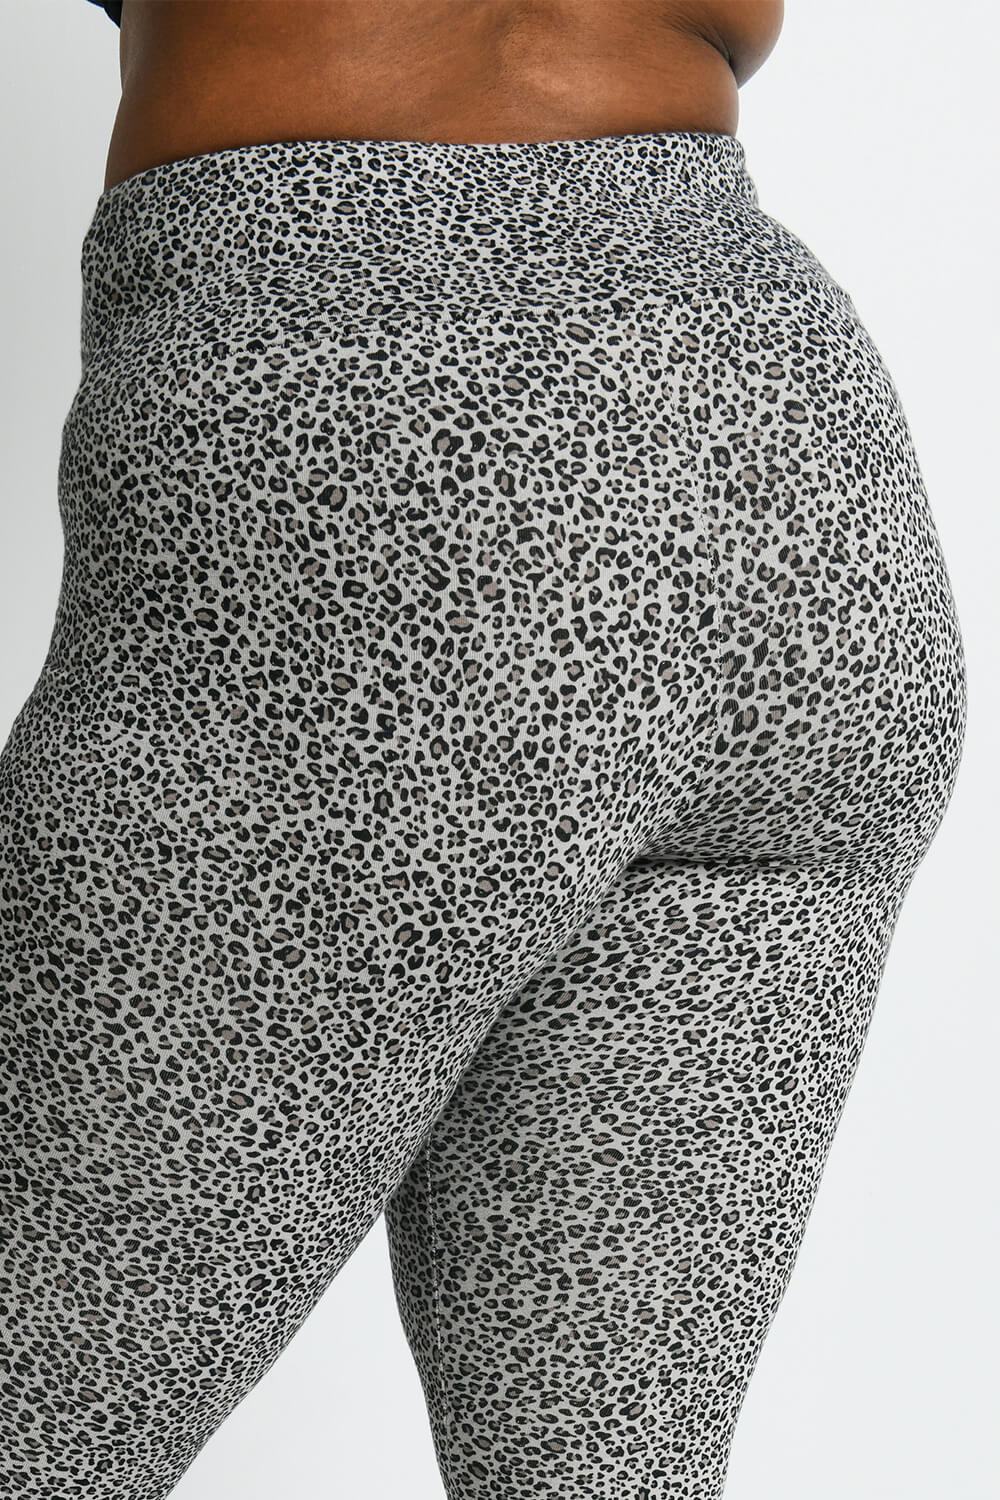 Terez big girls hi shine show leopard print leggings M(10-12) – Makenna's  Threads